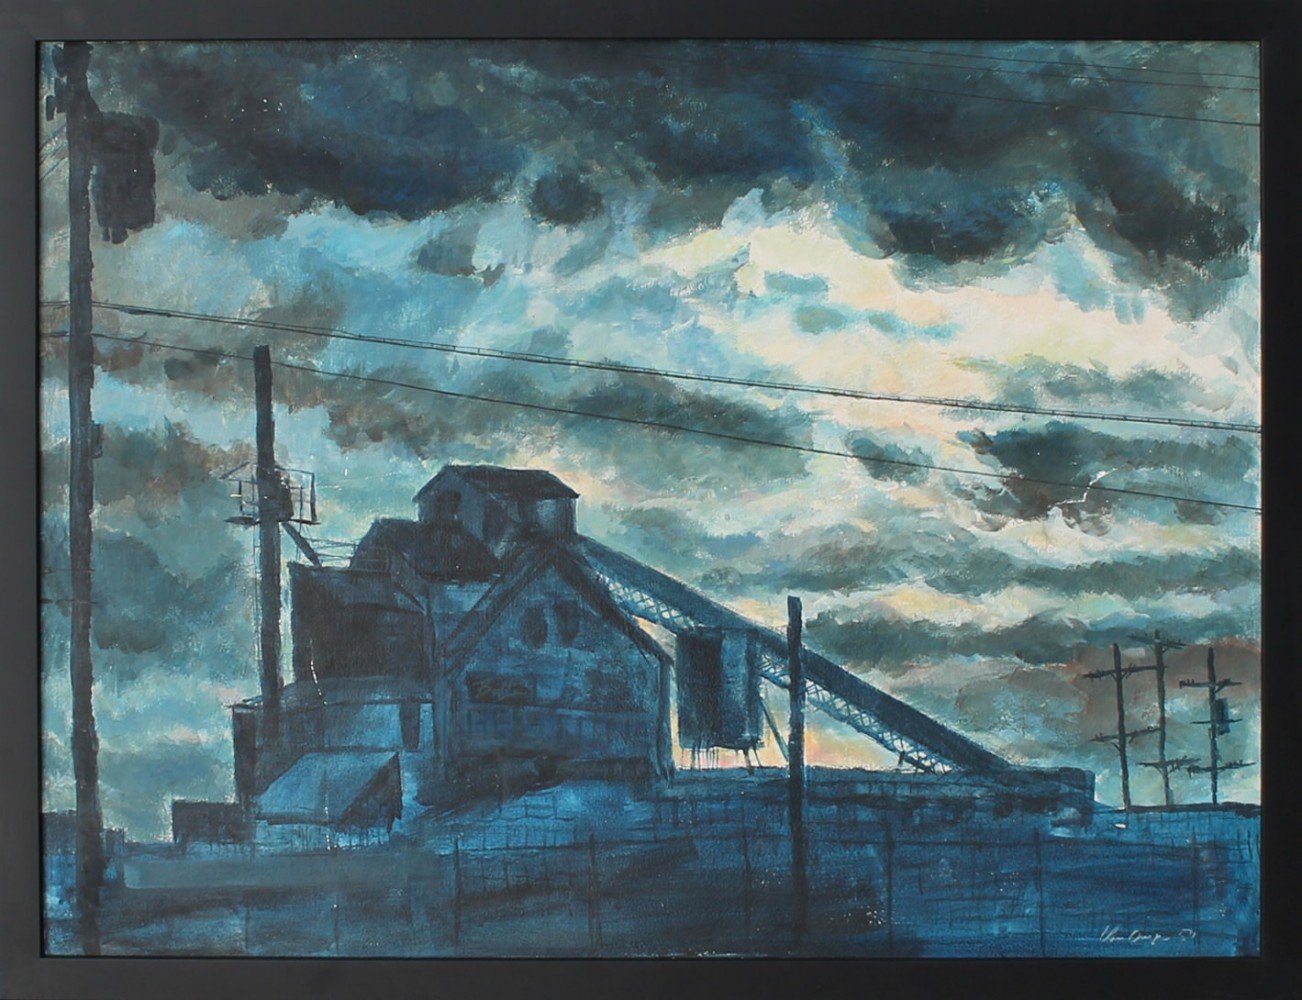 Steel Mill  by William A. Van Duzer